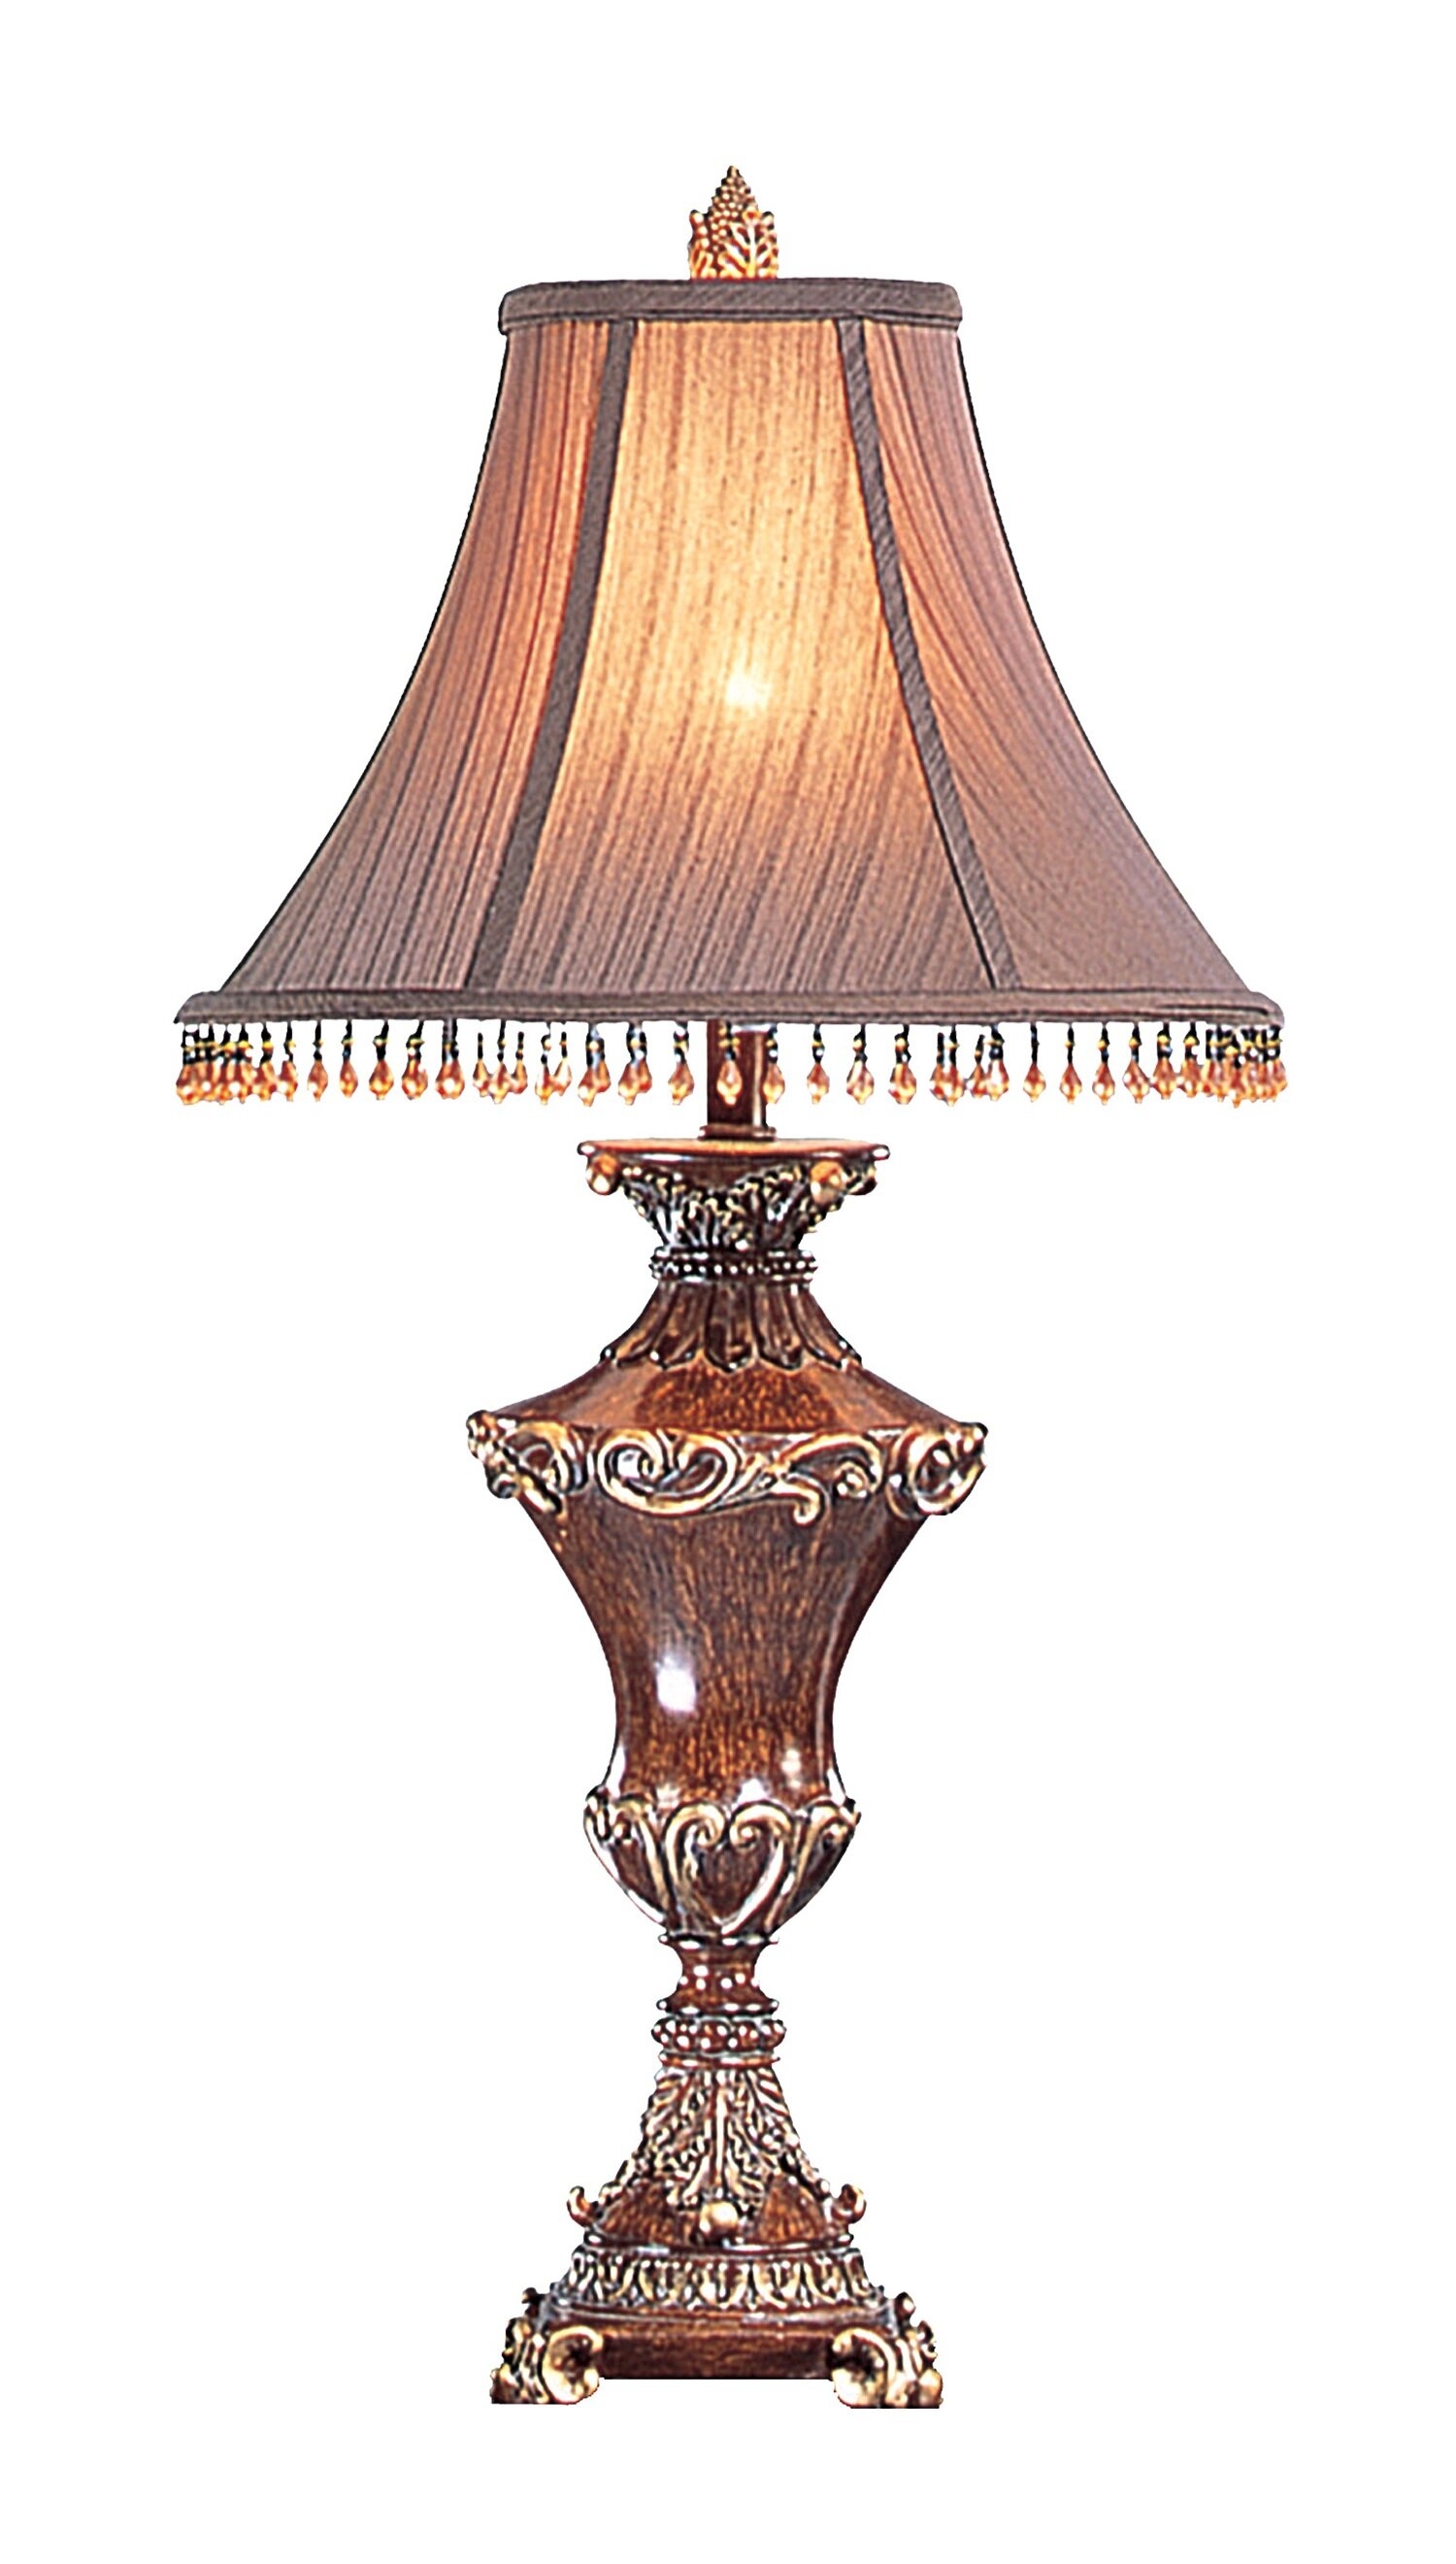 Tuscany table lamp